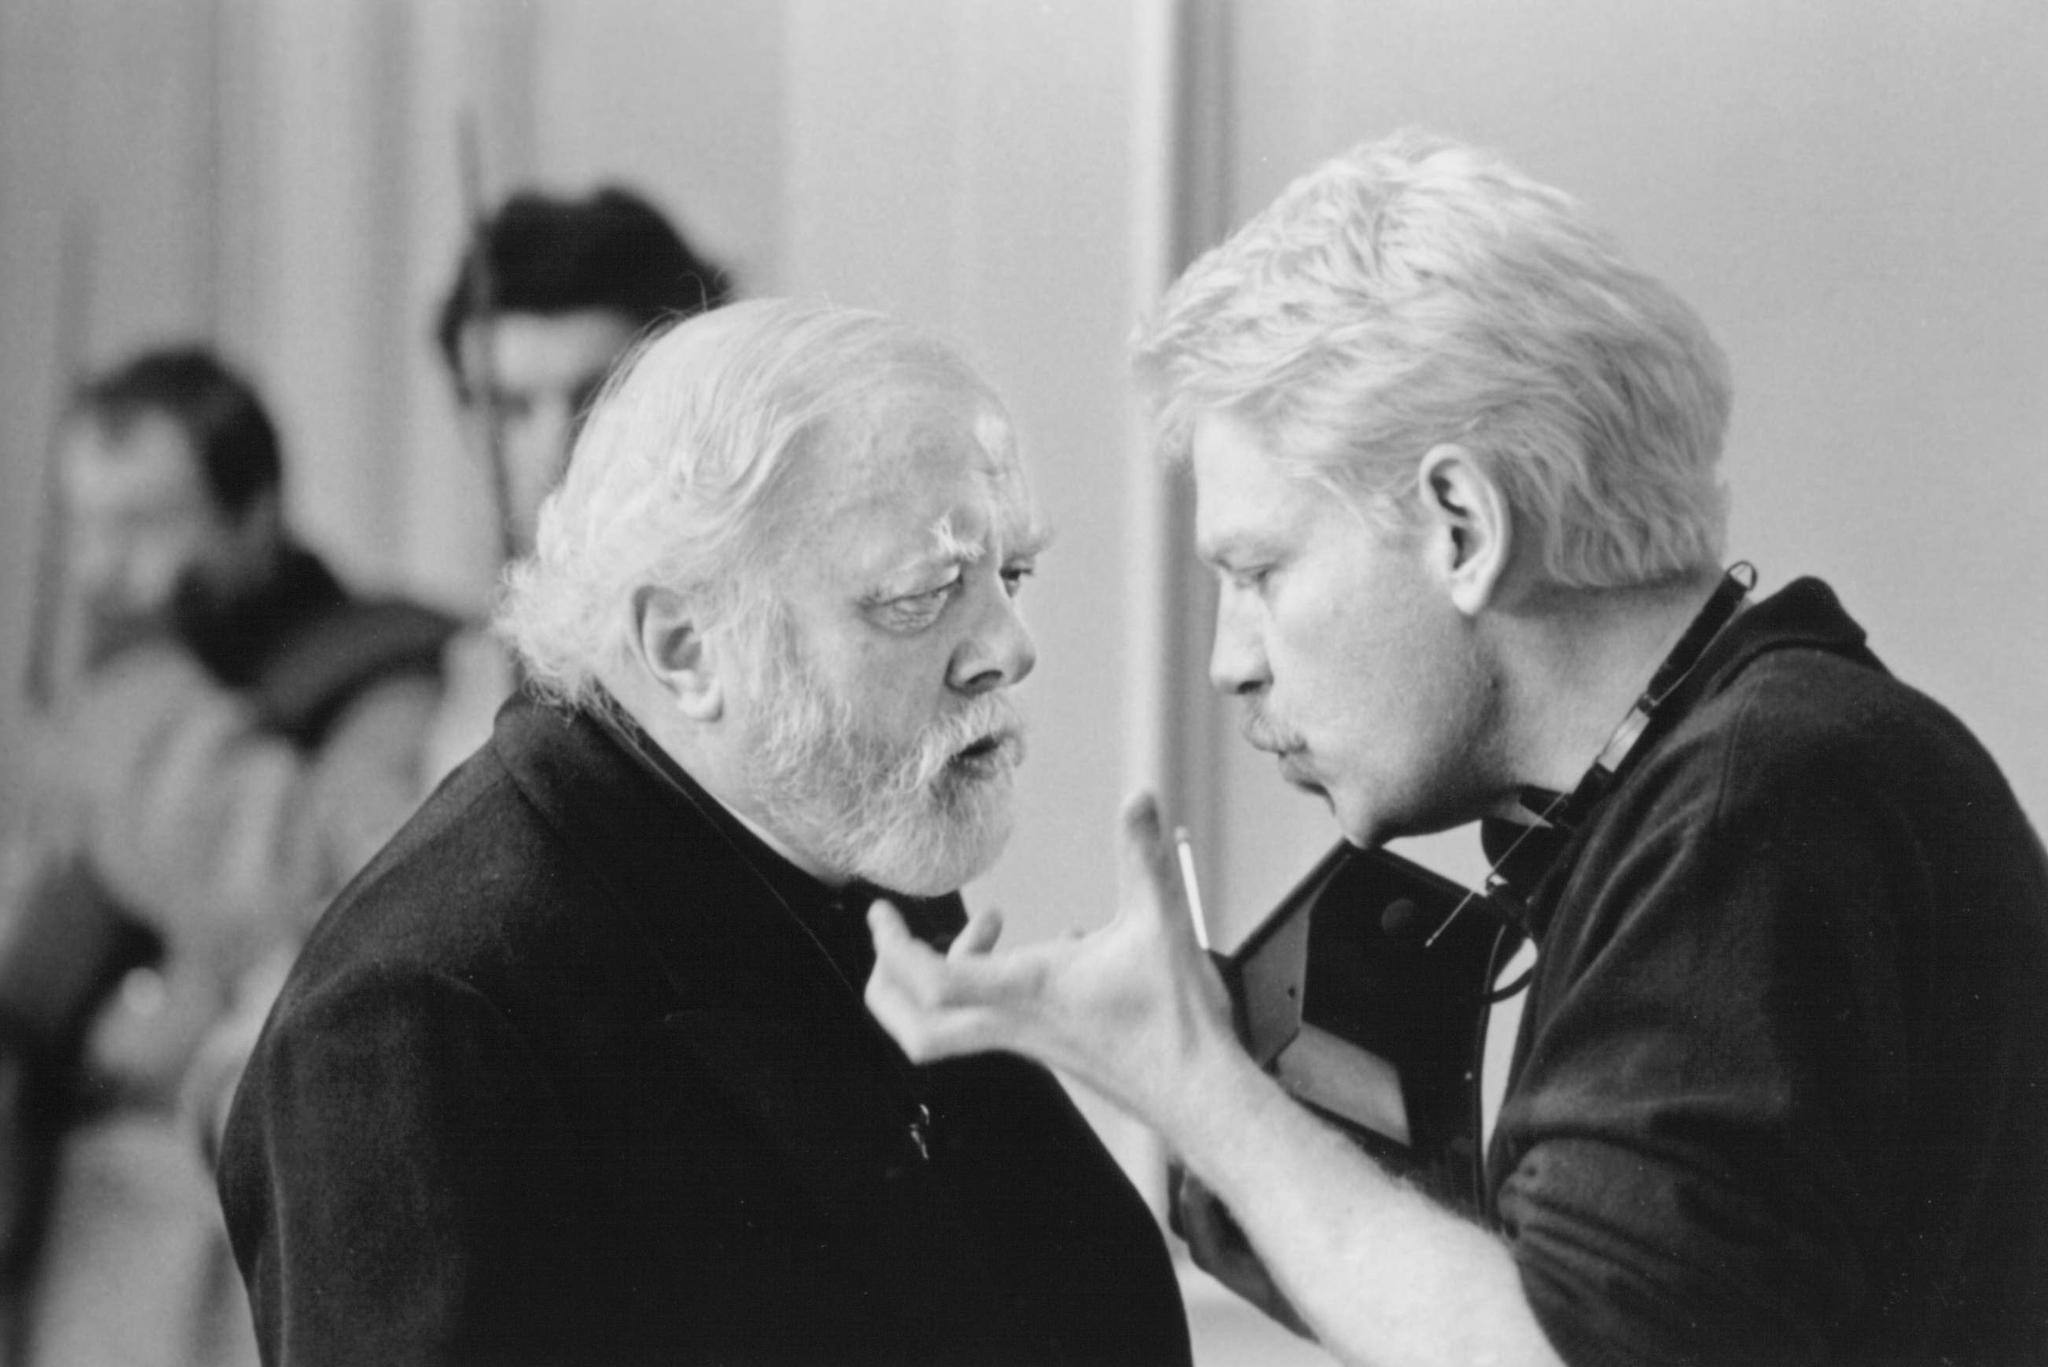 Richard Attenborough & Branagh Making 'Hamlet' (1996)